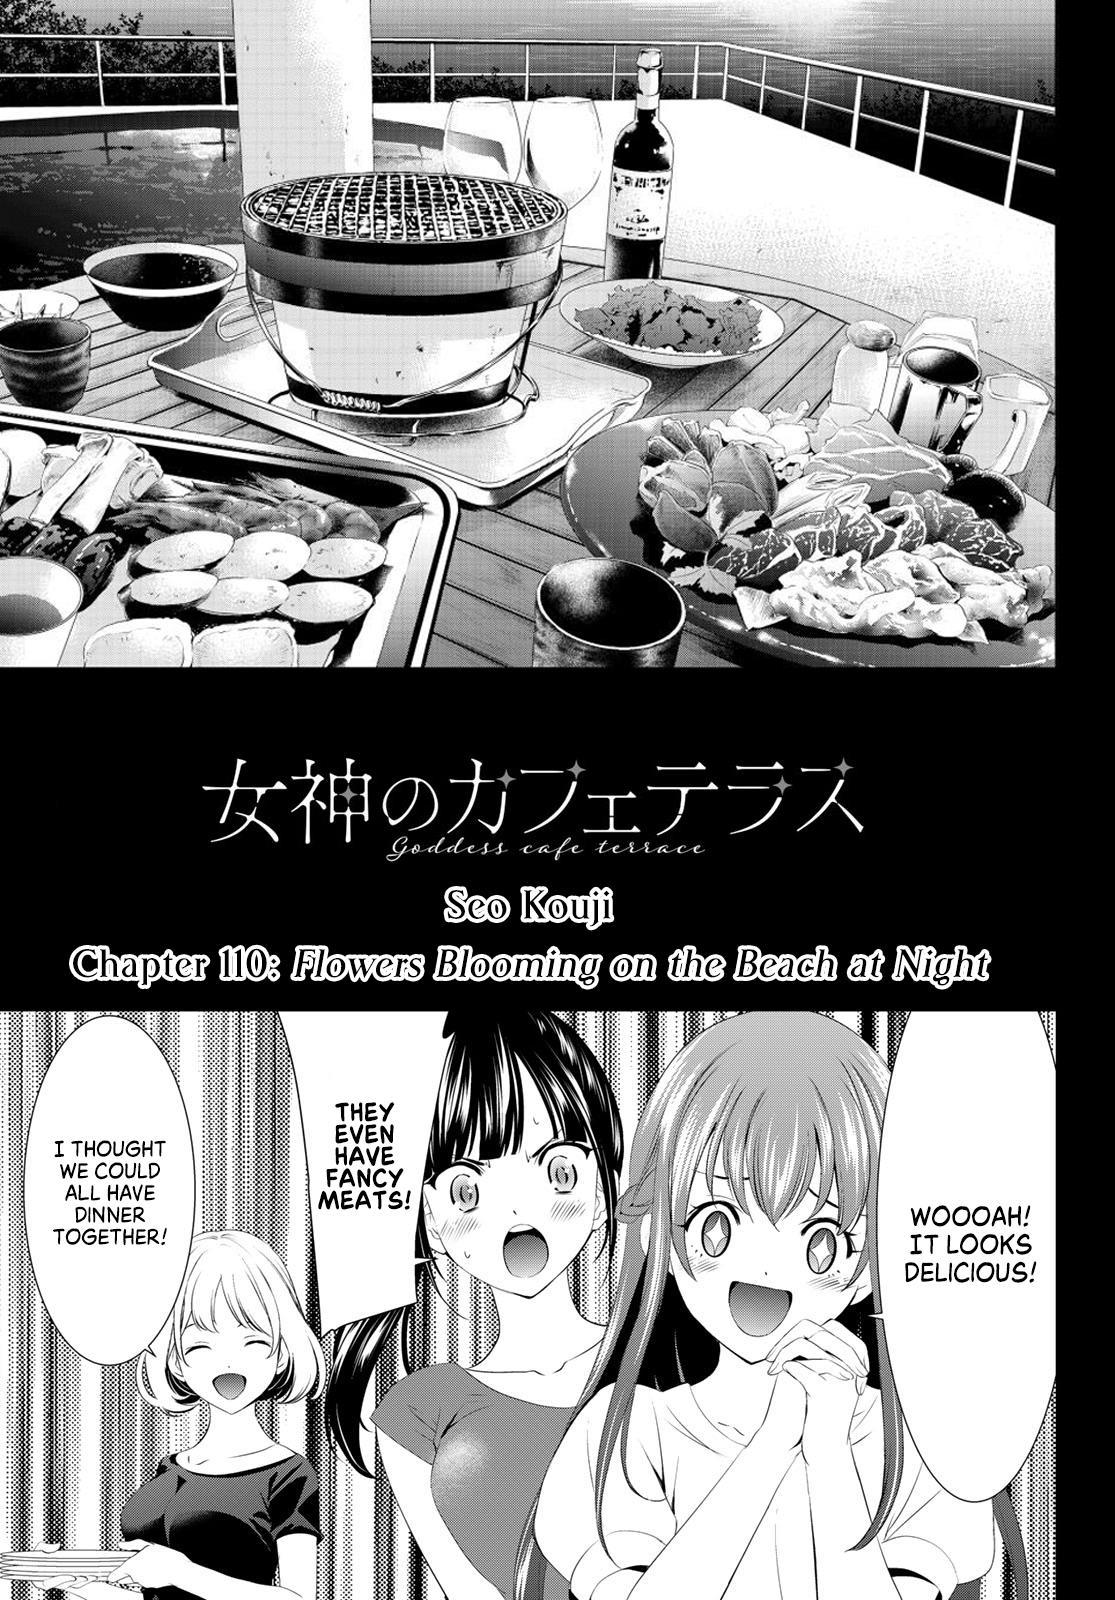 Goddess Cafe Terrace, Chapter 107 - Goddess Cafe Terrace Manga Online